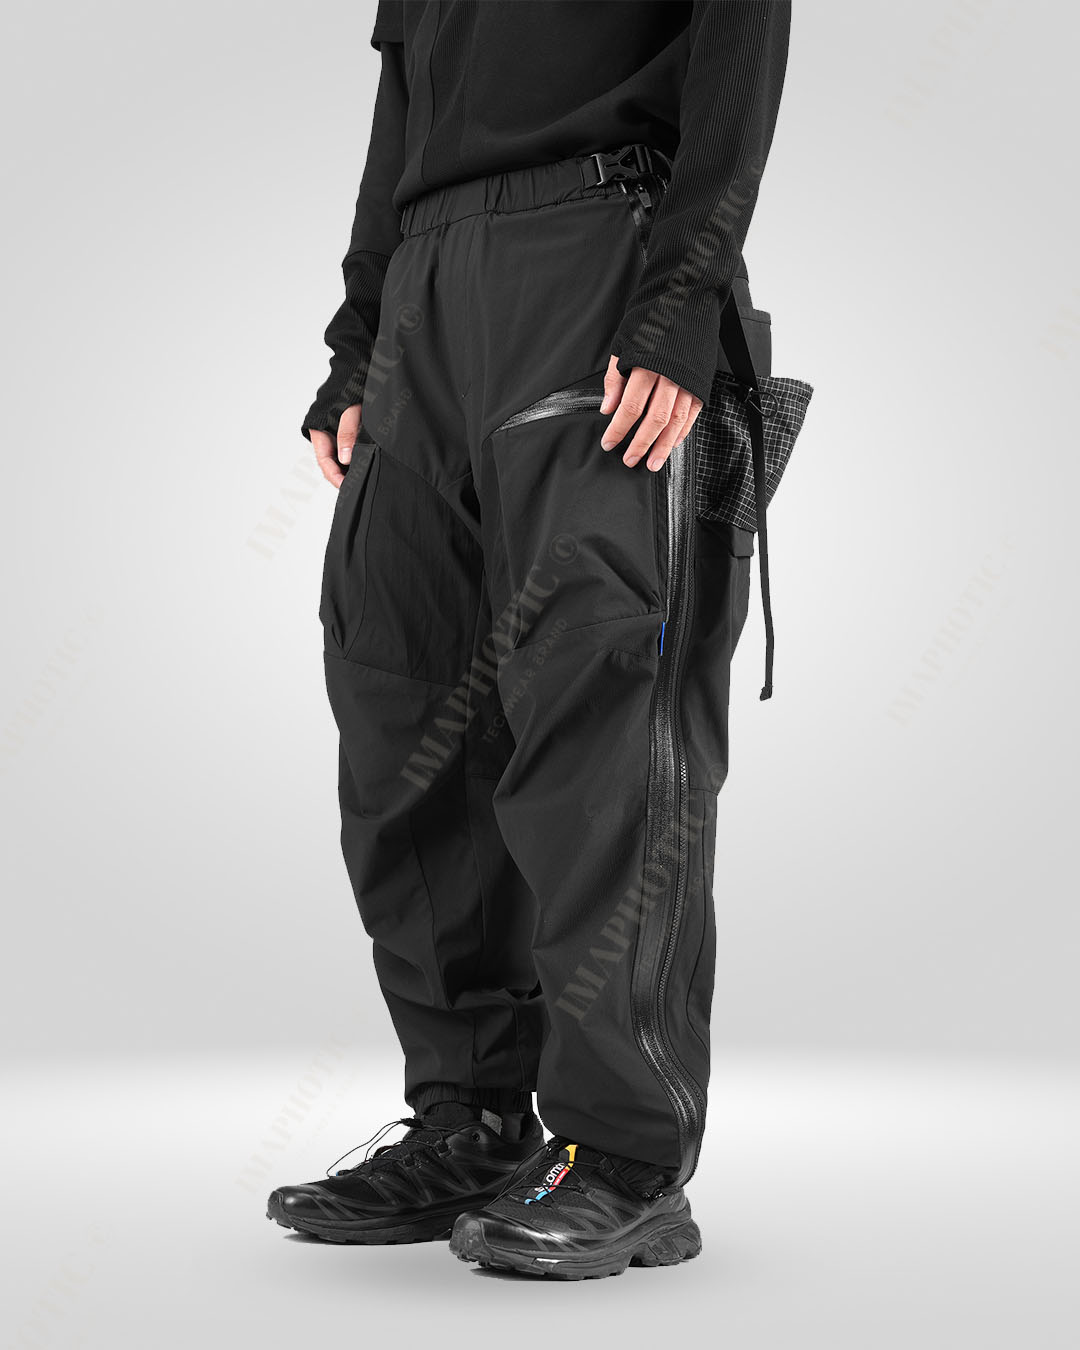 Loose Fit Side Zipper Pants for Men – Imaphotic